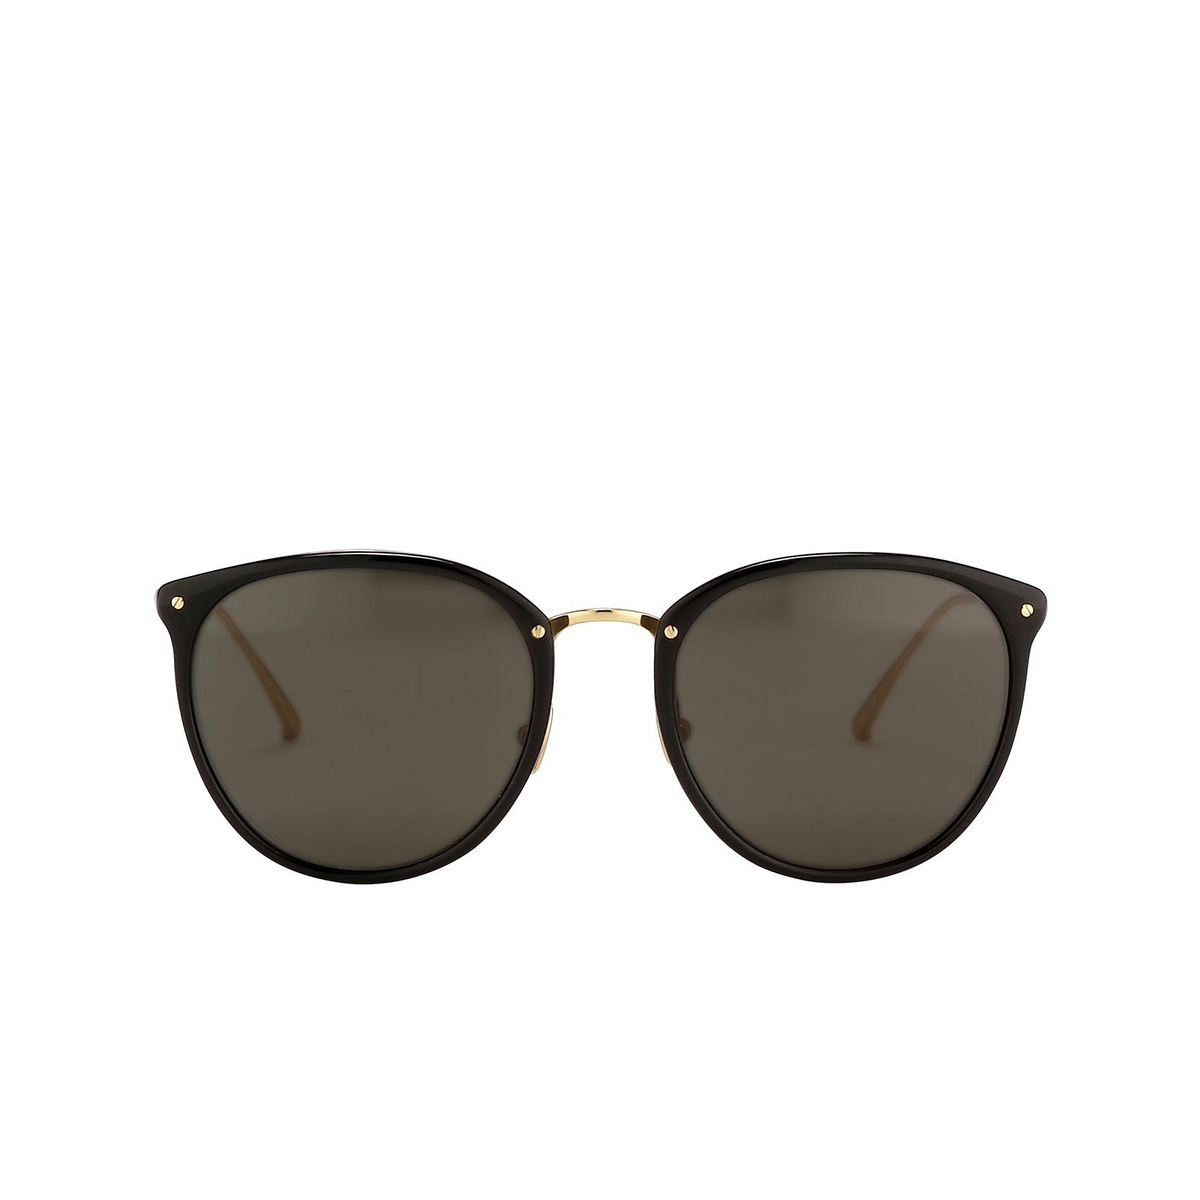 Linda Farrow CALTHORPE Sunglasses 13 Black / Yellow Gold - front view